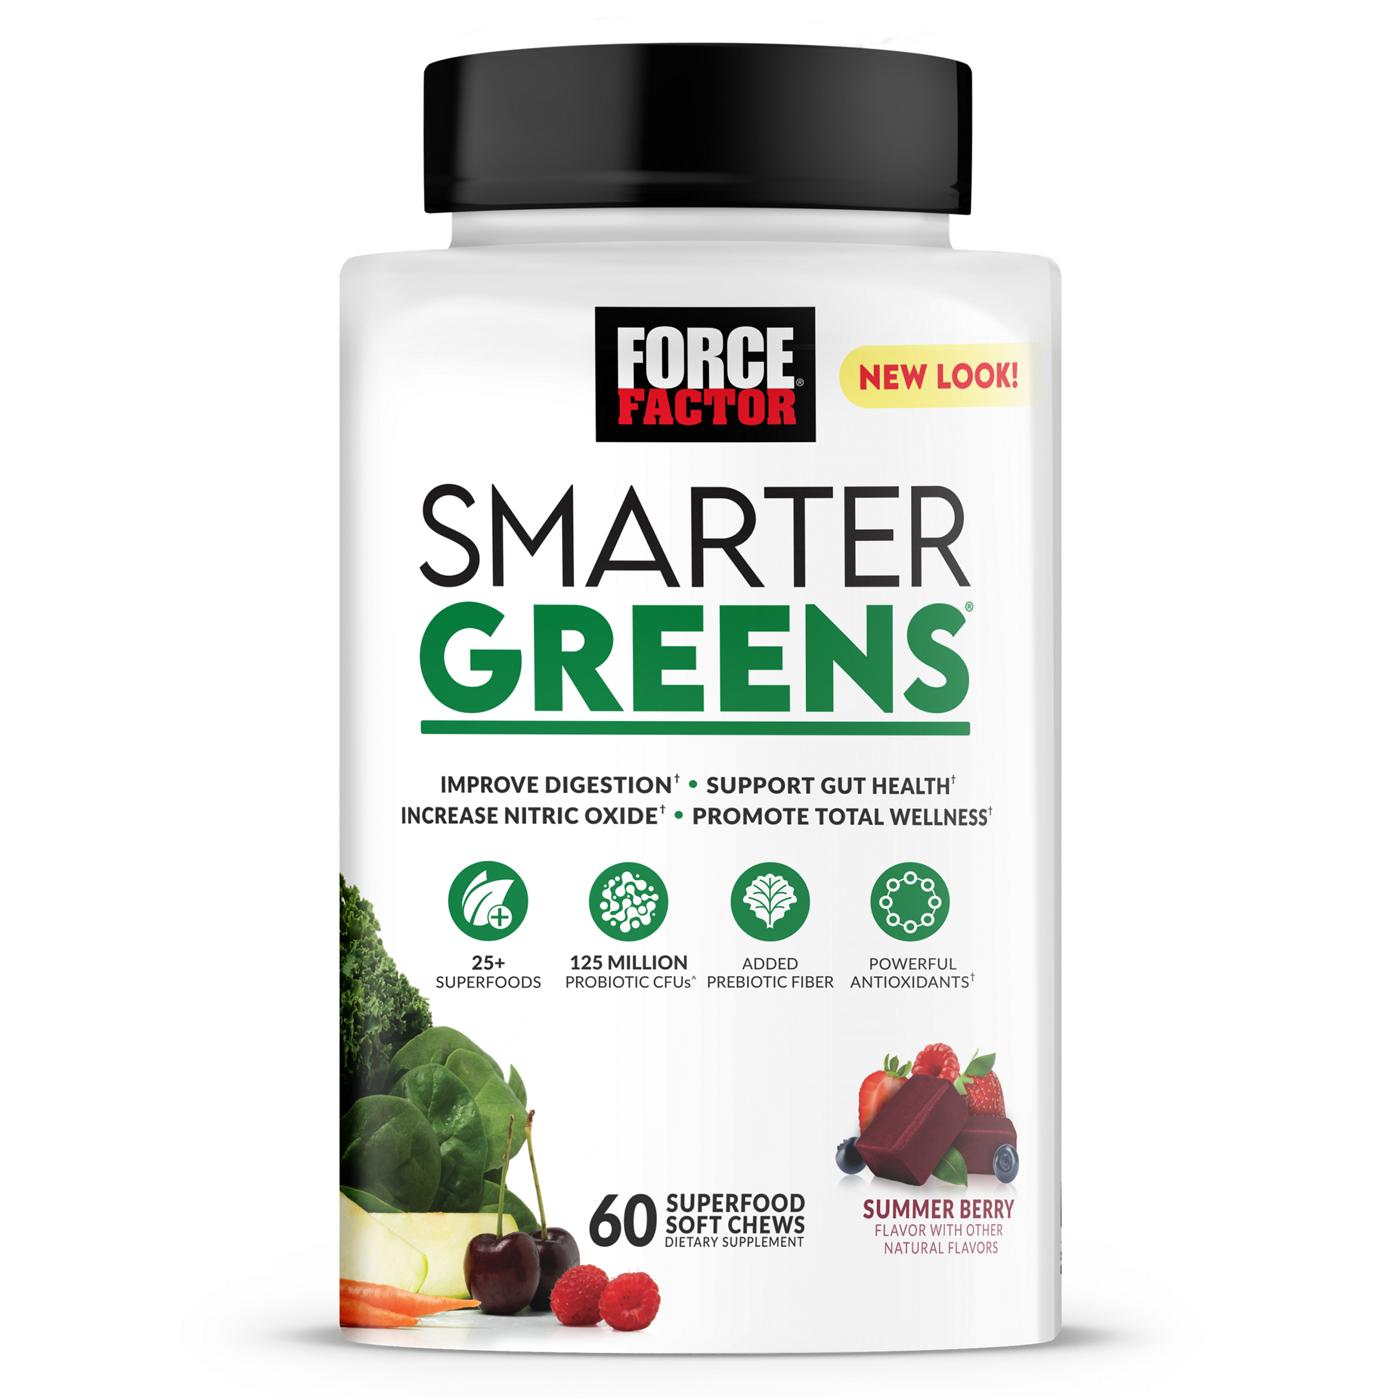 Force Factor Smarter Greens Super Food Soft Chews - Summer Berry; image 1 of 6